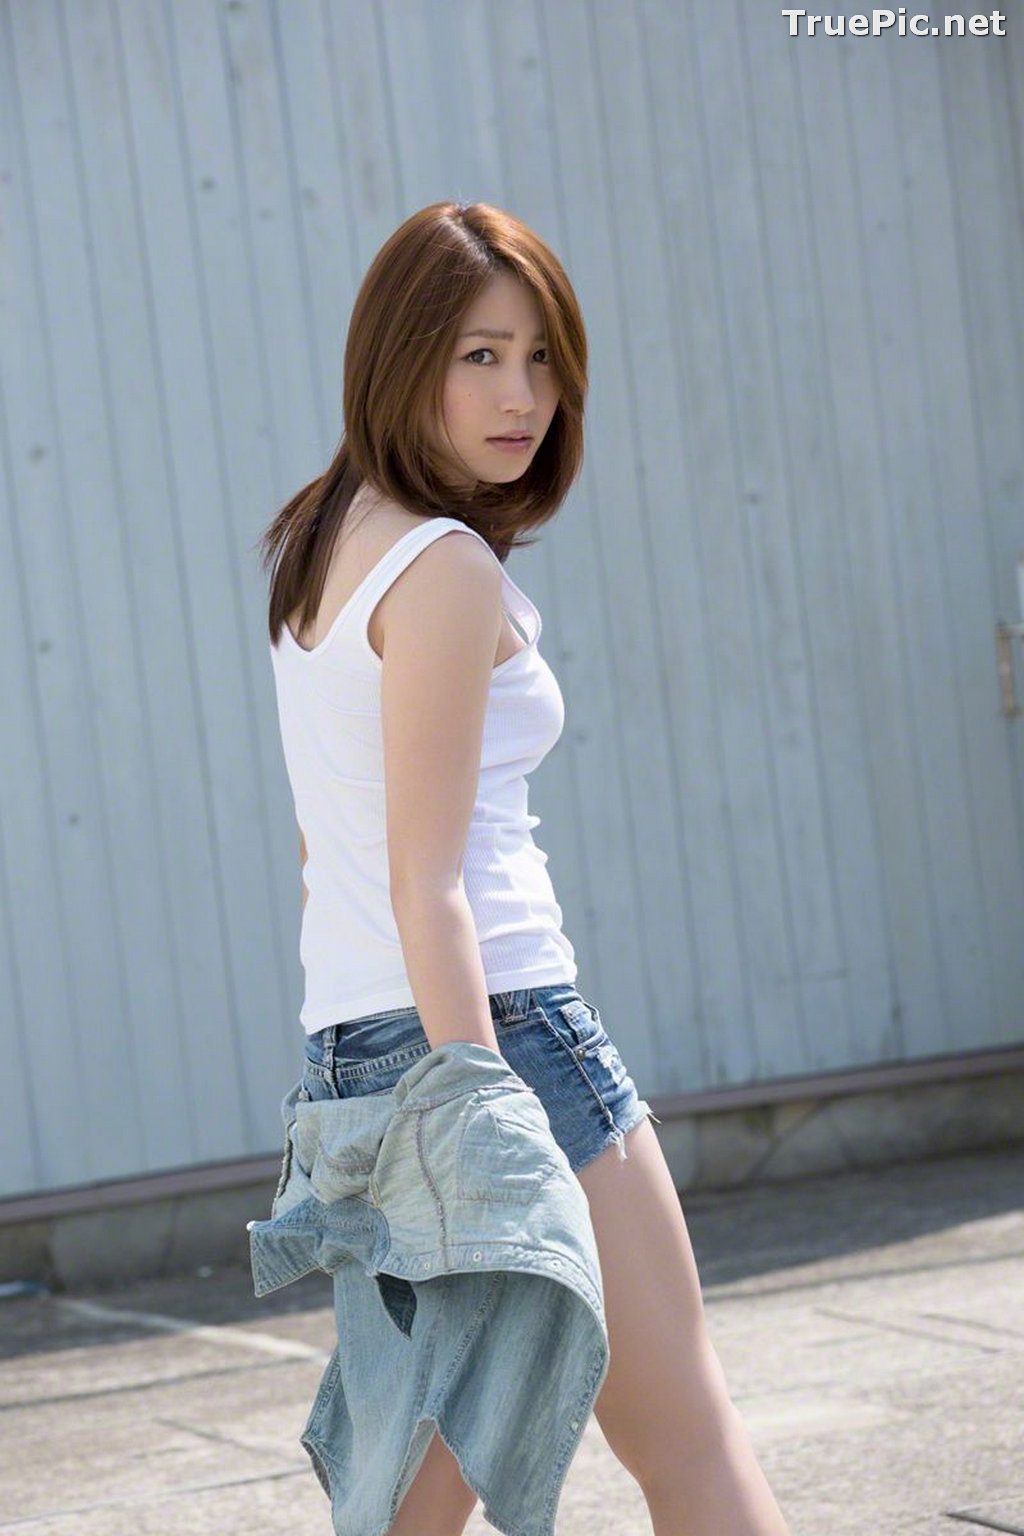 Image [Wanibooks Jacket] No.129 - Japanese Singer and Actress - You Kikkawa - TruePic.net - Picture-90